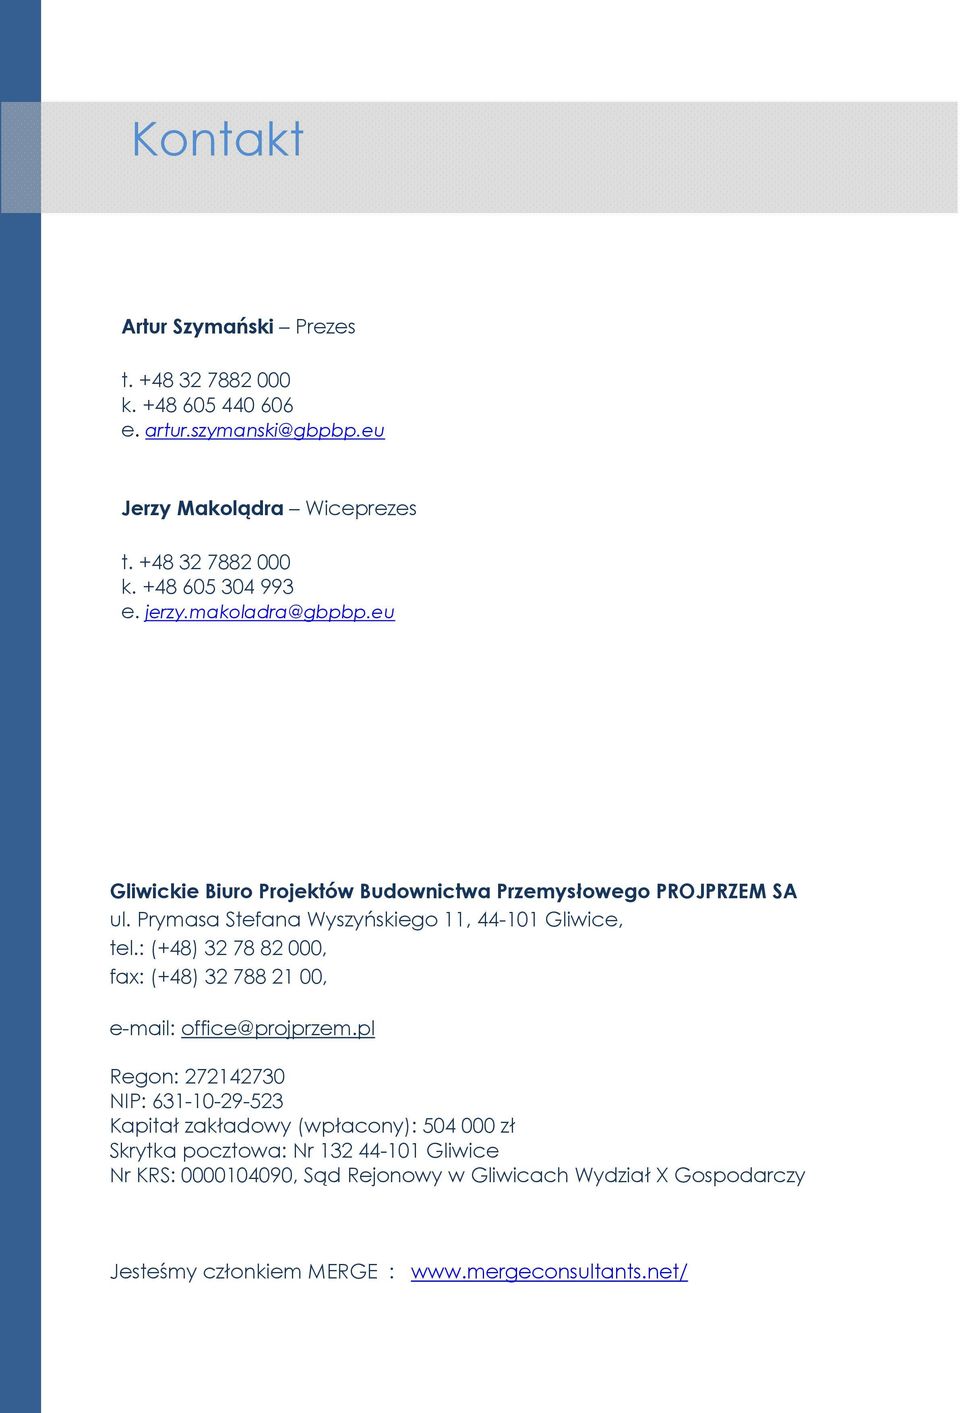 : (+48) 32 78 82 000, fax: (+48) 32 788 21 00, e-mail: office@projprzem.